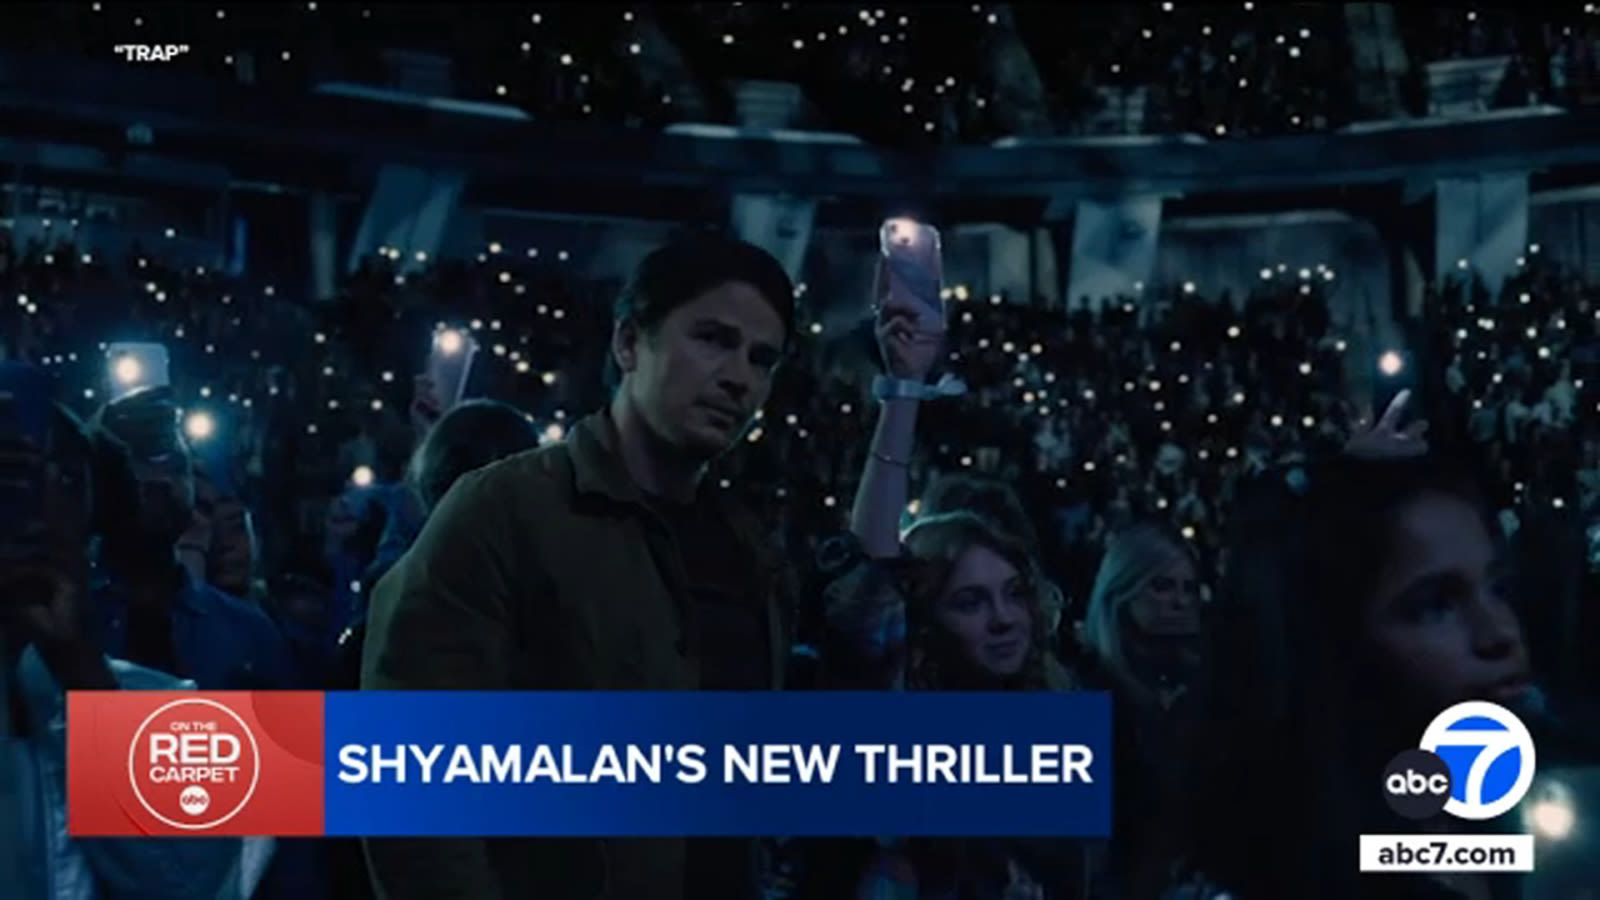 M. Night Shyamalan's new film 'Trap' with Josh Hartnett offers thrills, chills, signature twist